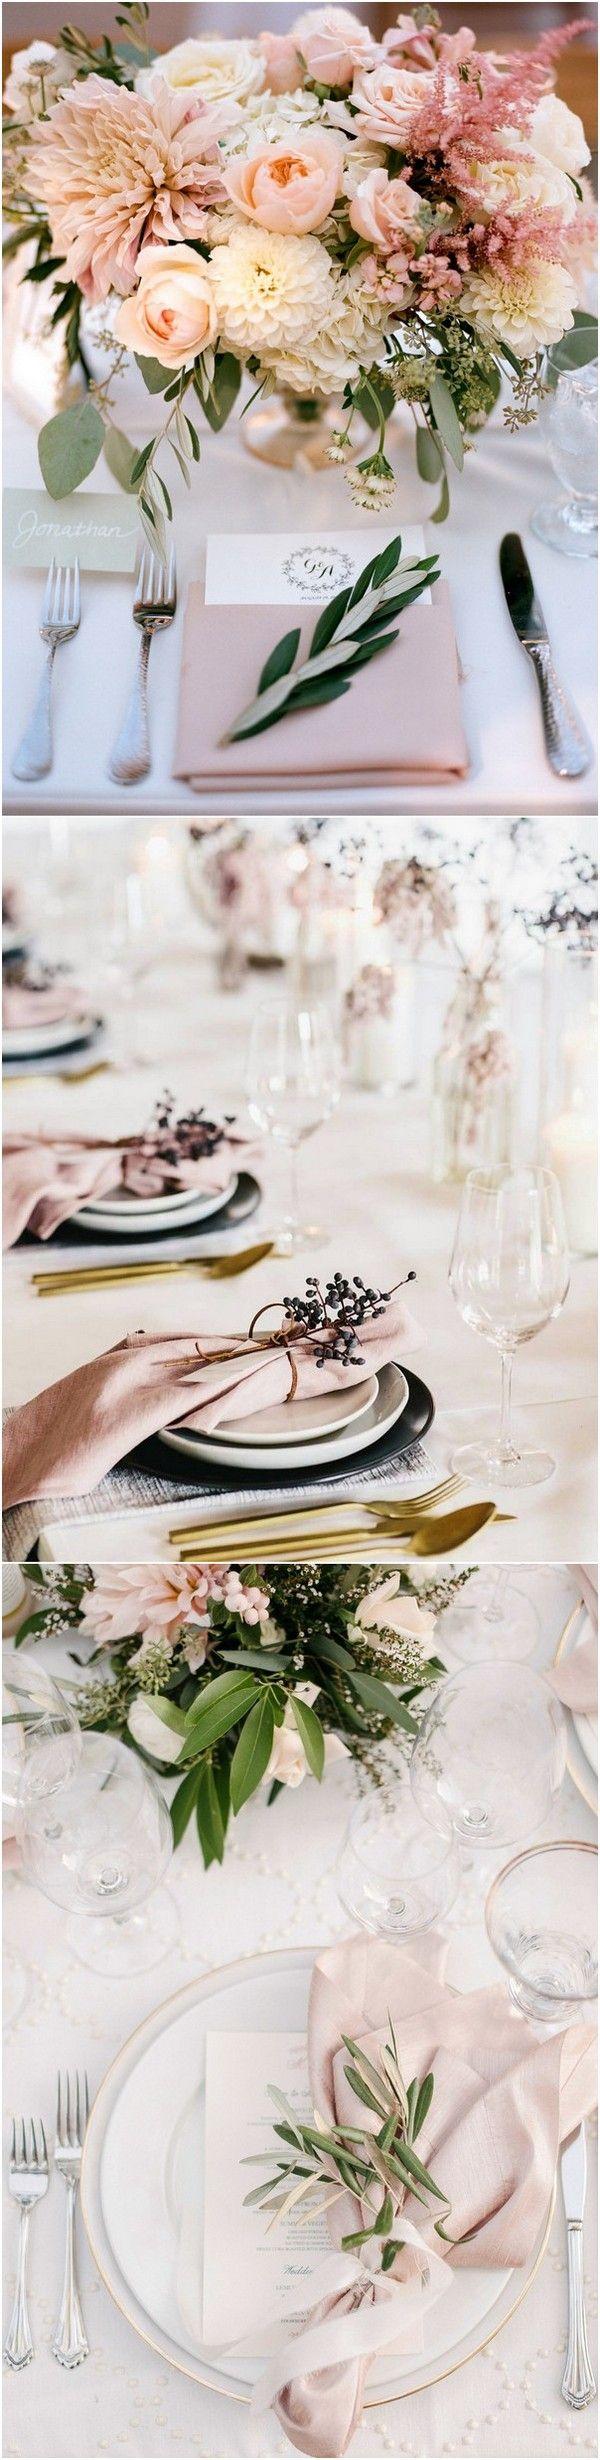 Wedding - Top 15 So Elegant Wedding Table Setting Ideas For 2018